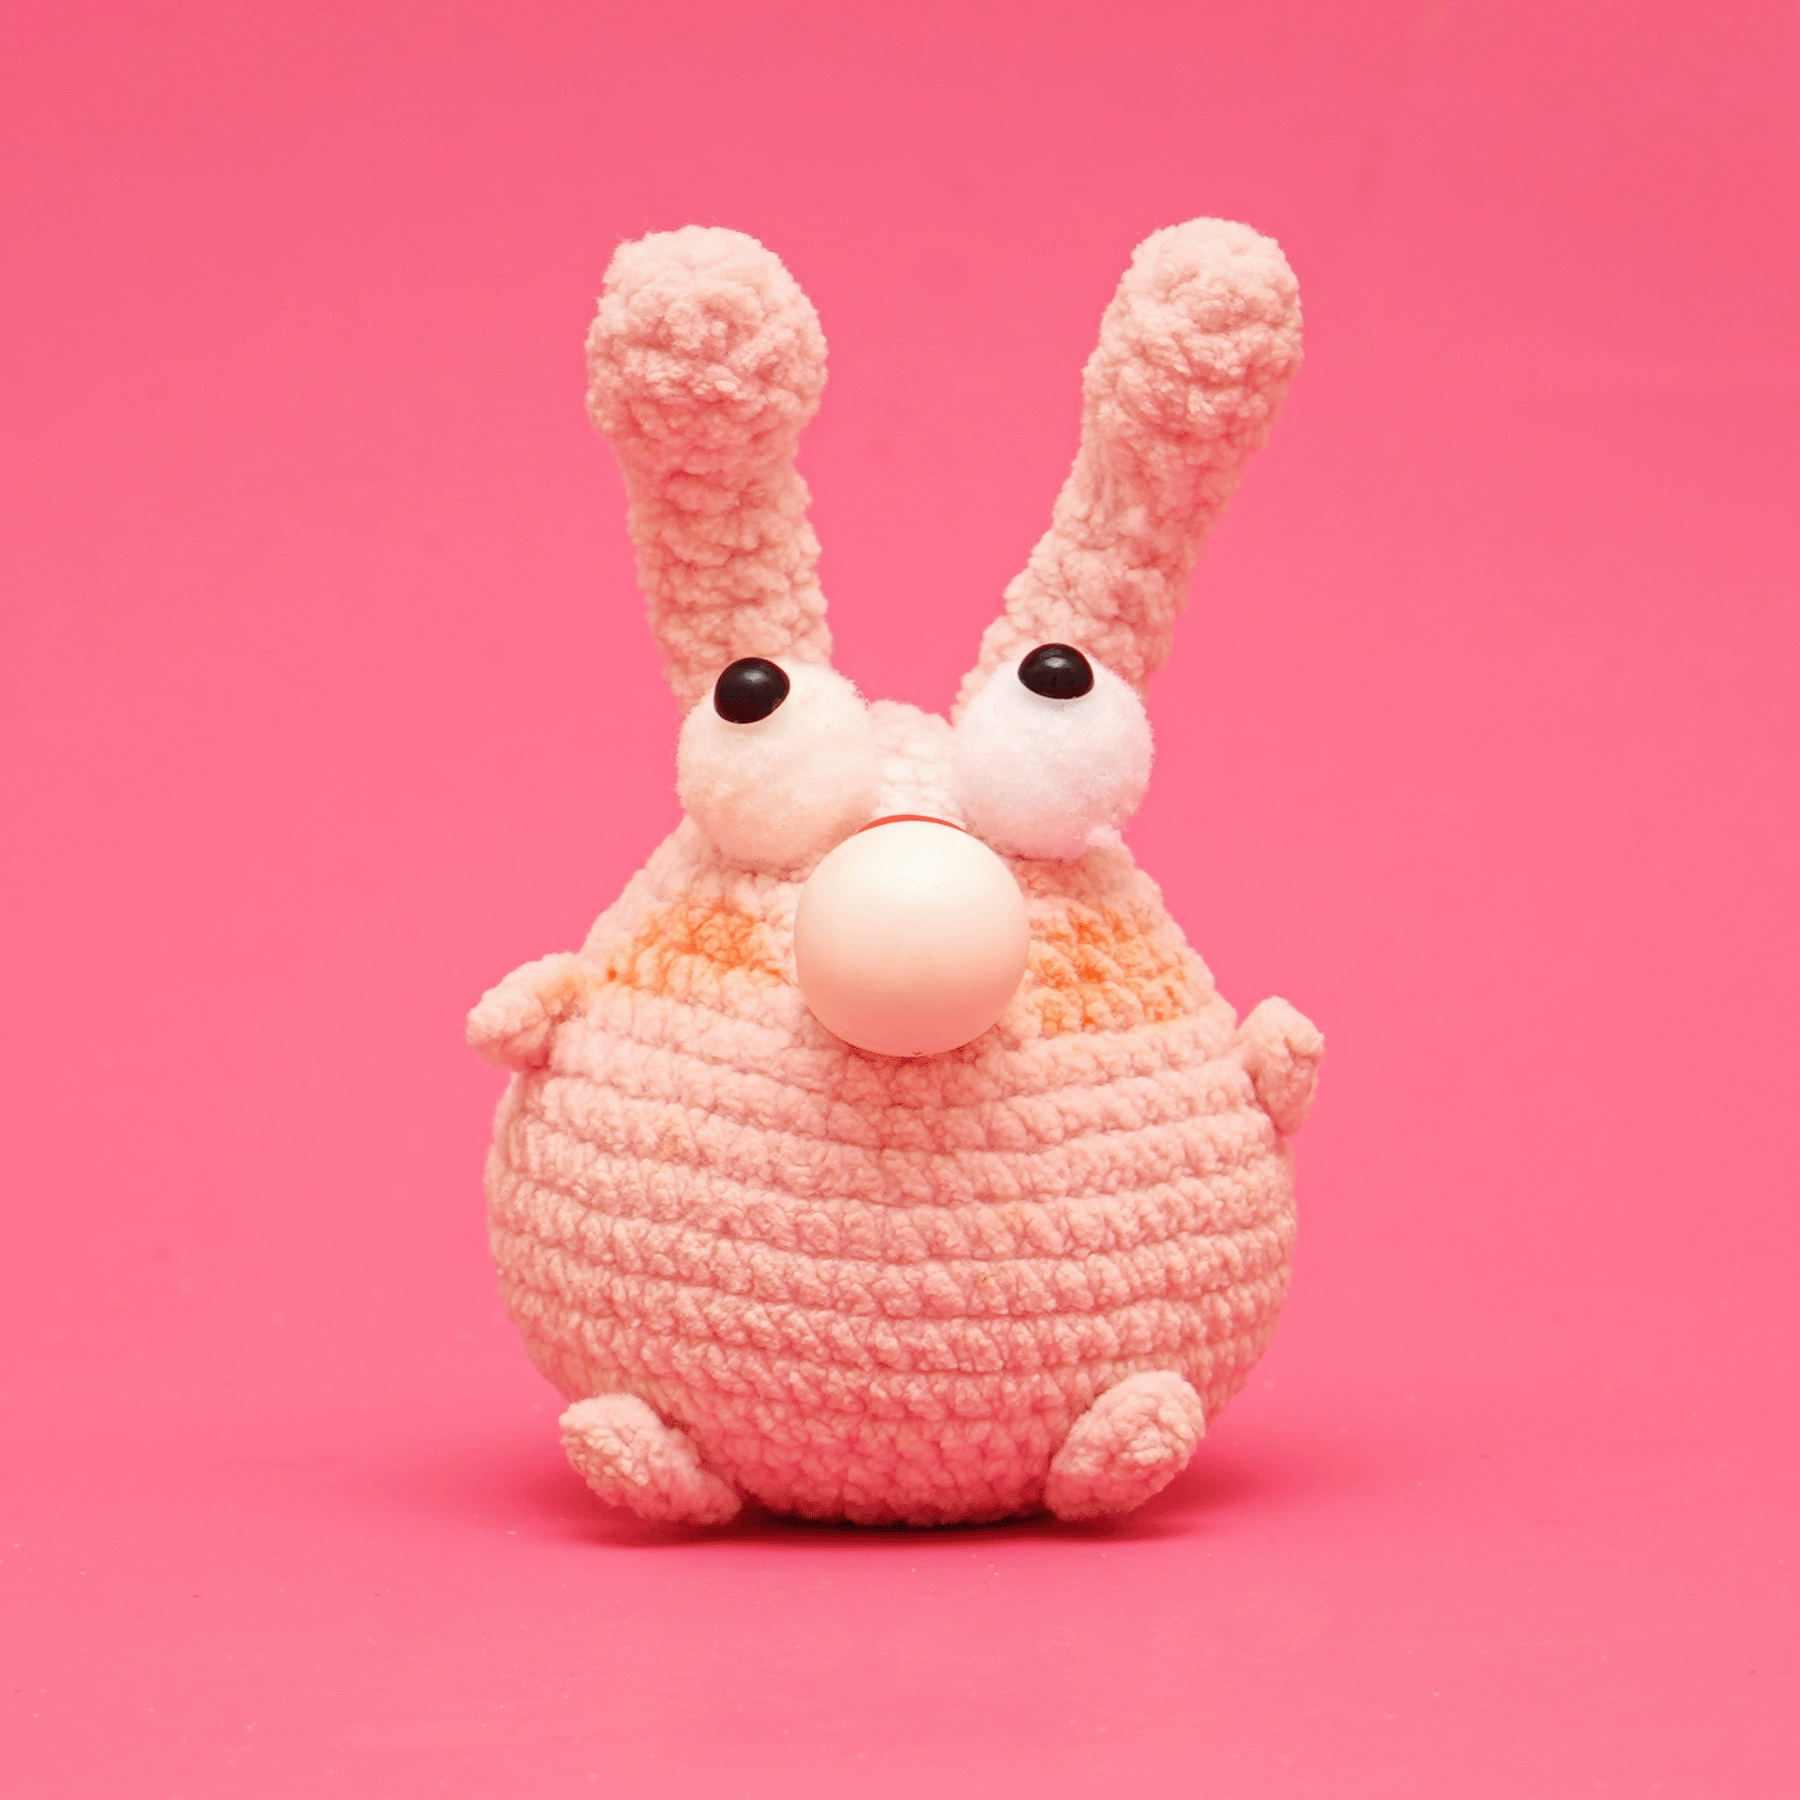 Lucky Snail Christmas Crochet Kit for Beginners, Beginner Crochet Starter Kit with Complete Step-by-Step Video Tutorials, Learn to Crochet Kits for